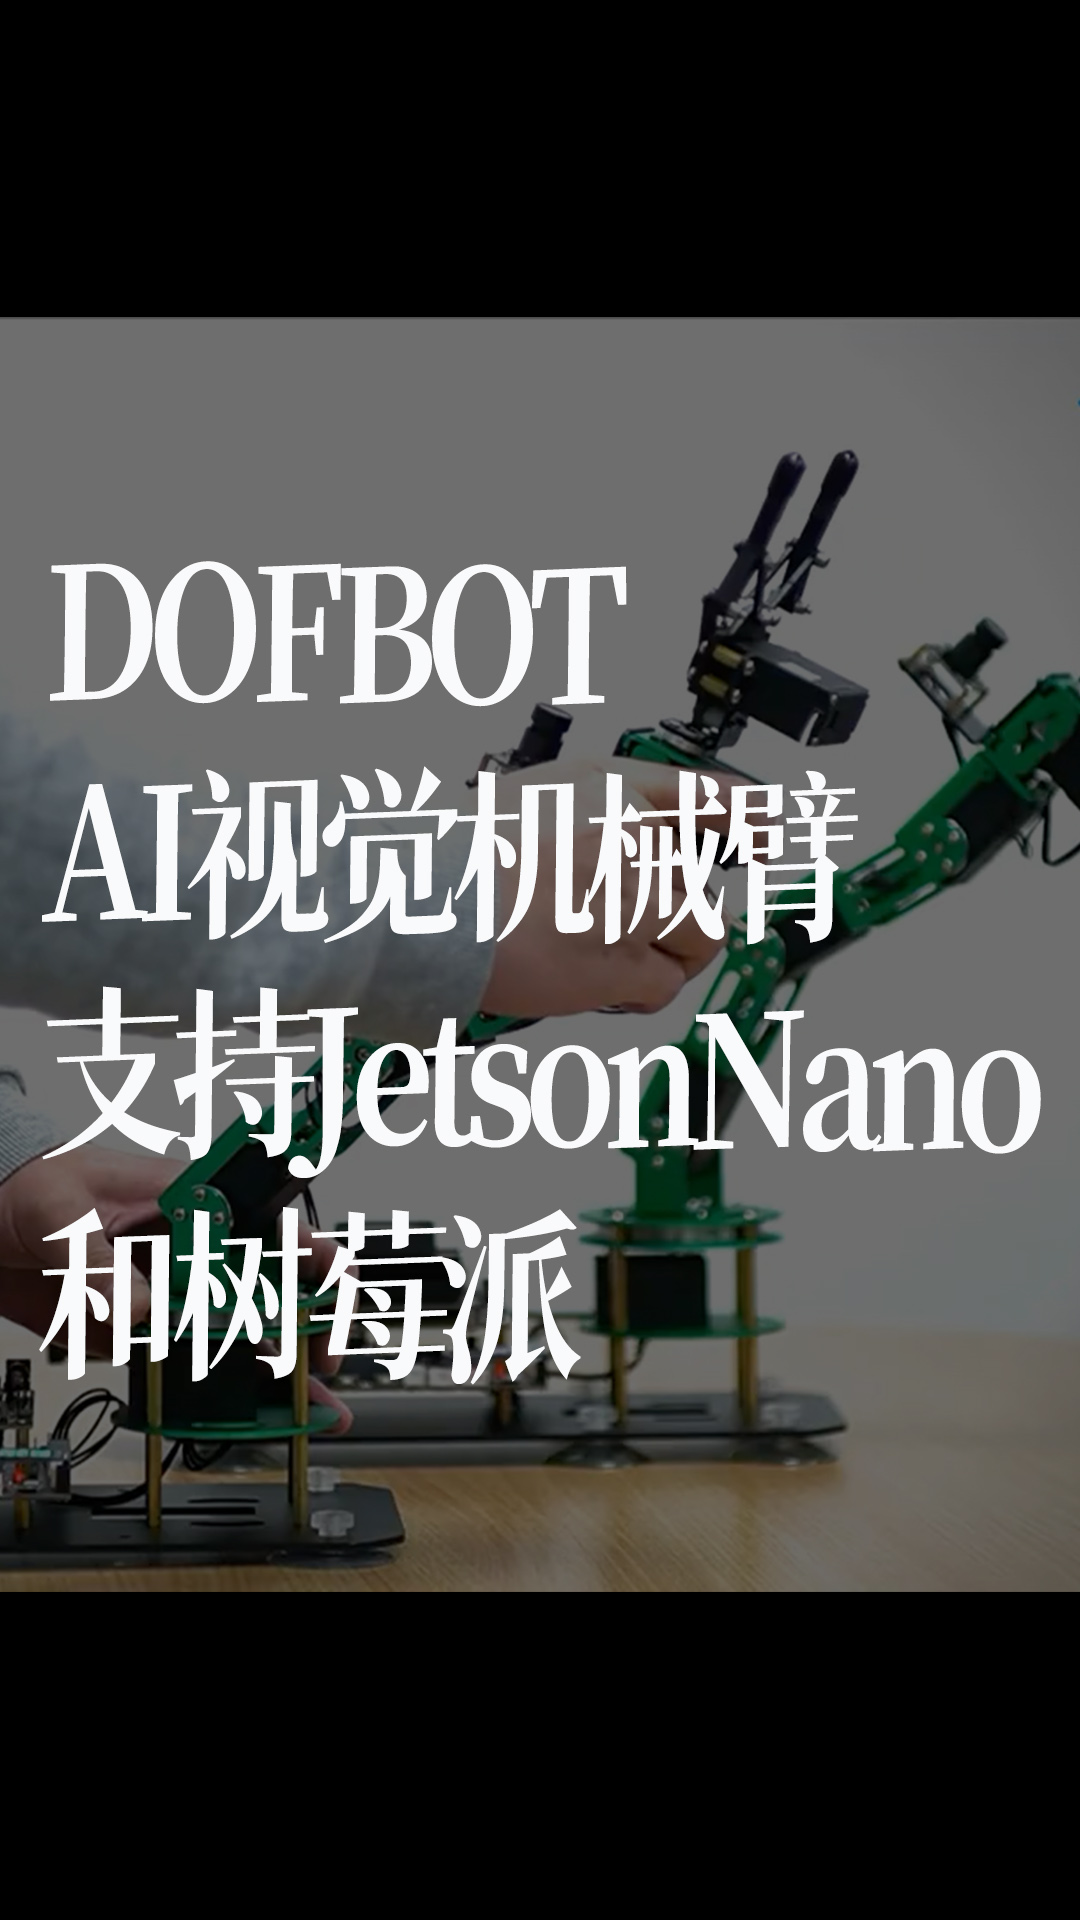 DOFBOT AI視覺機械臂，支持JetsonNano和樹莓派